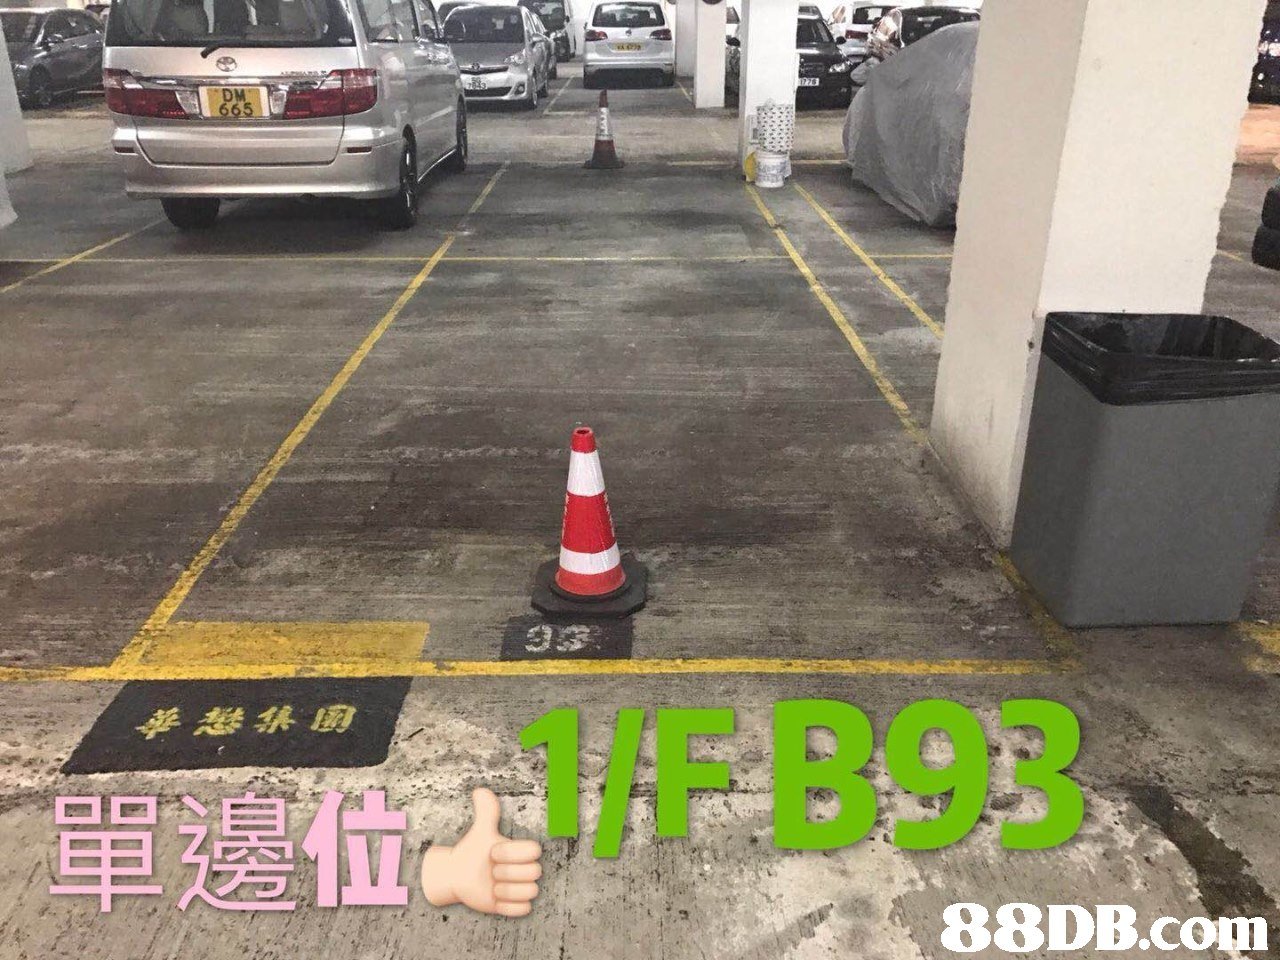 1/F B93 華懋集圓 88DB.com  asphalt